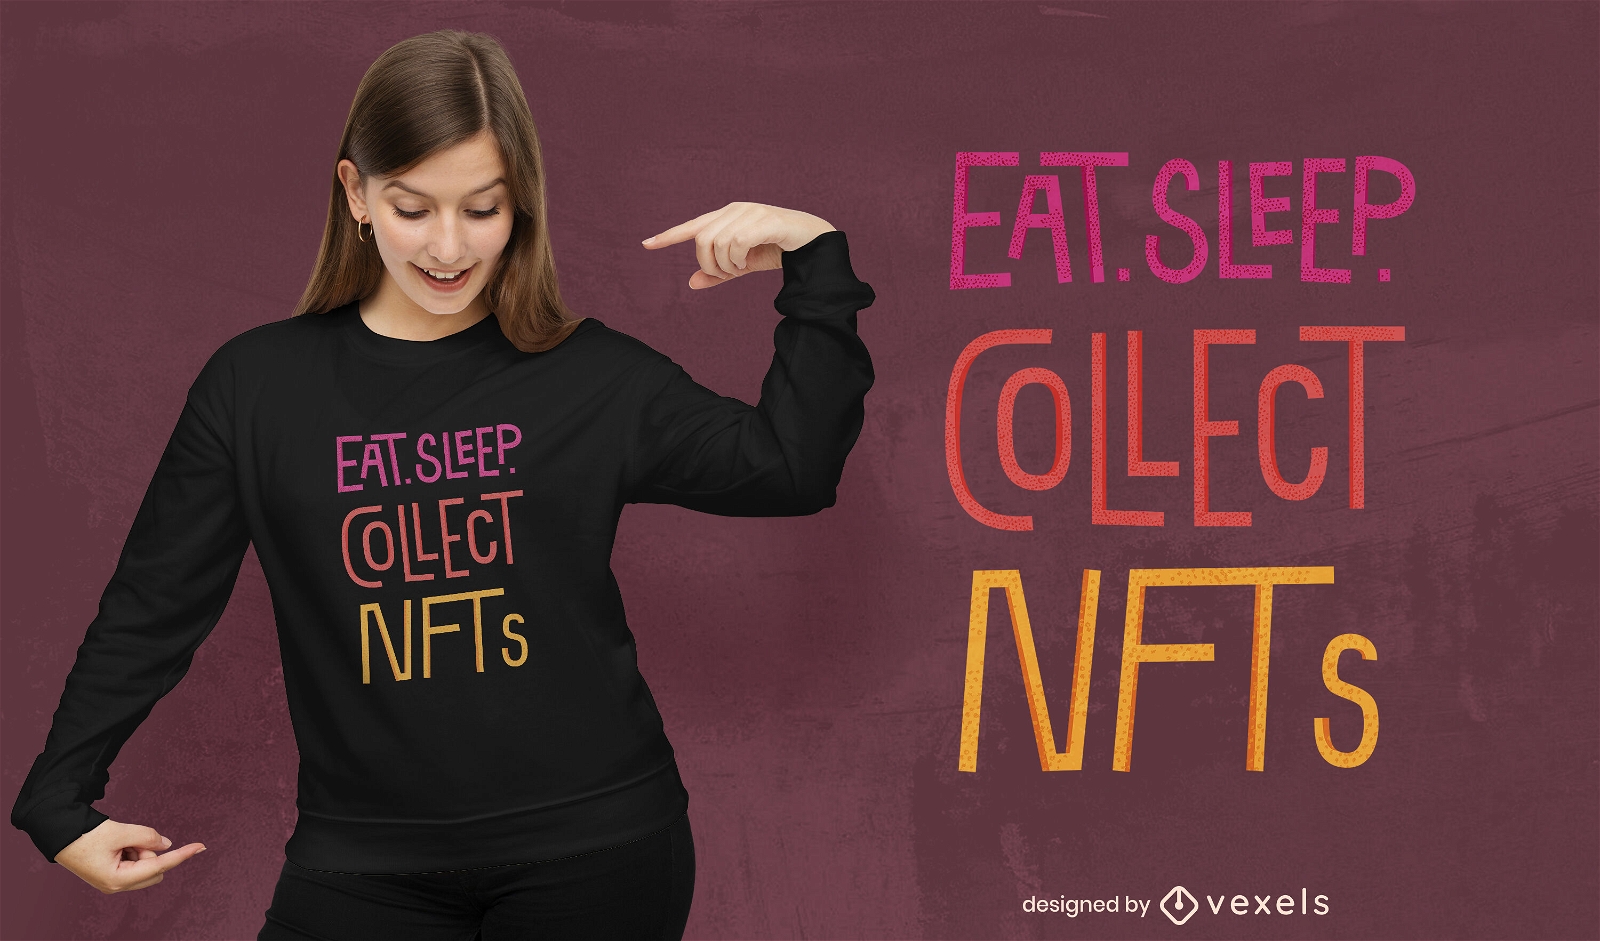 Eat sleep and collect nft t-shirt design